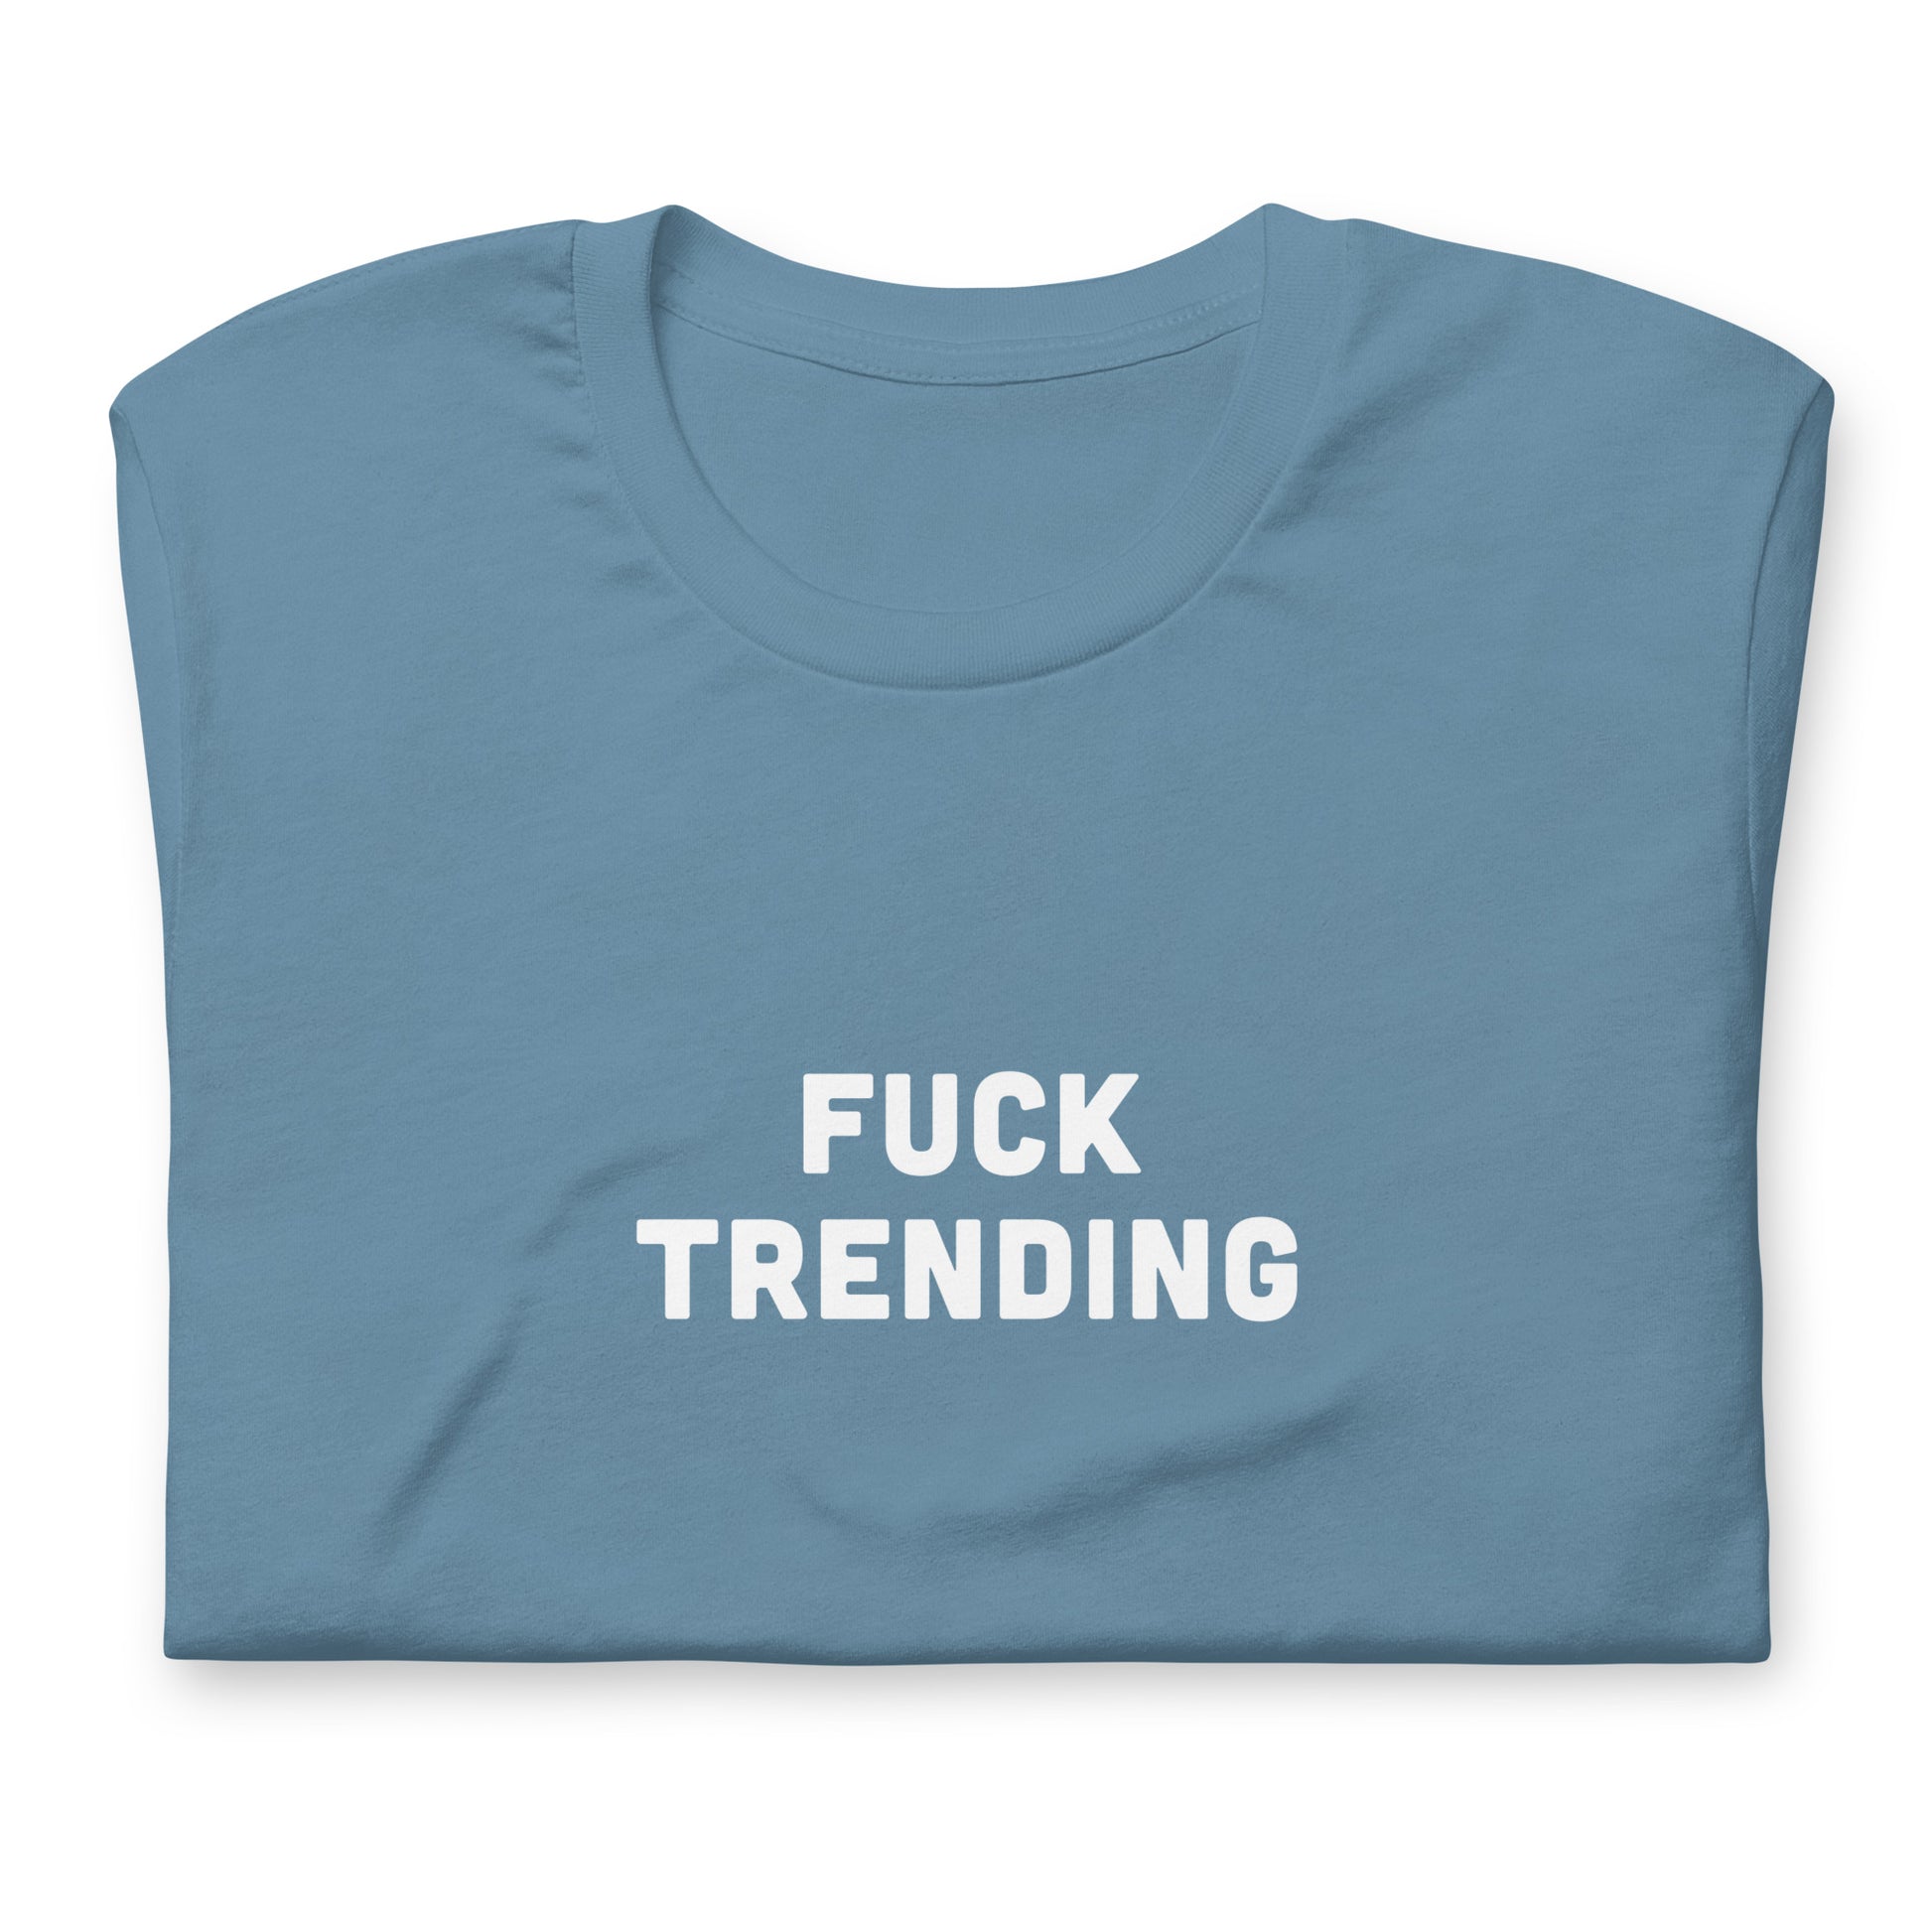 Fuck Trending T-Shirt Size M Color Forest